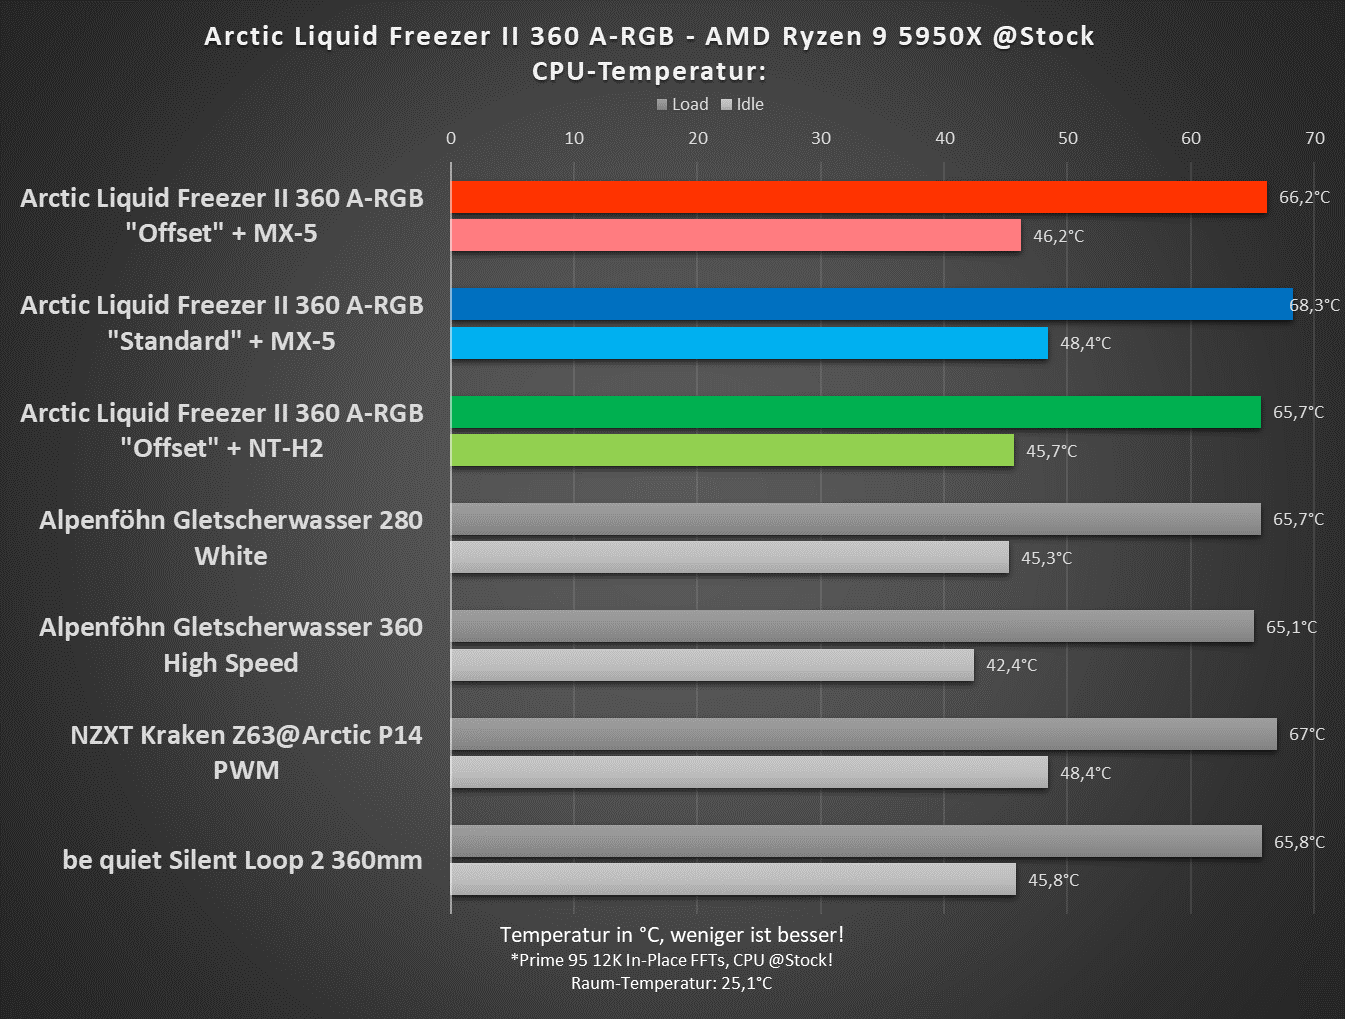 Arctic Liquid Freezer II 360 A-RGB auf einem AMD Ryzen 9 5950X